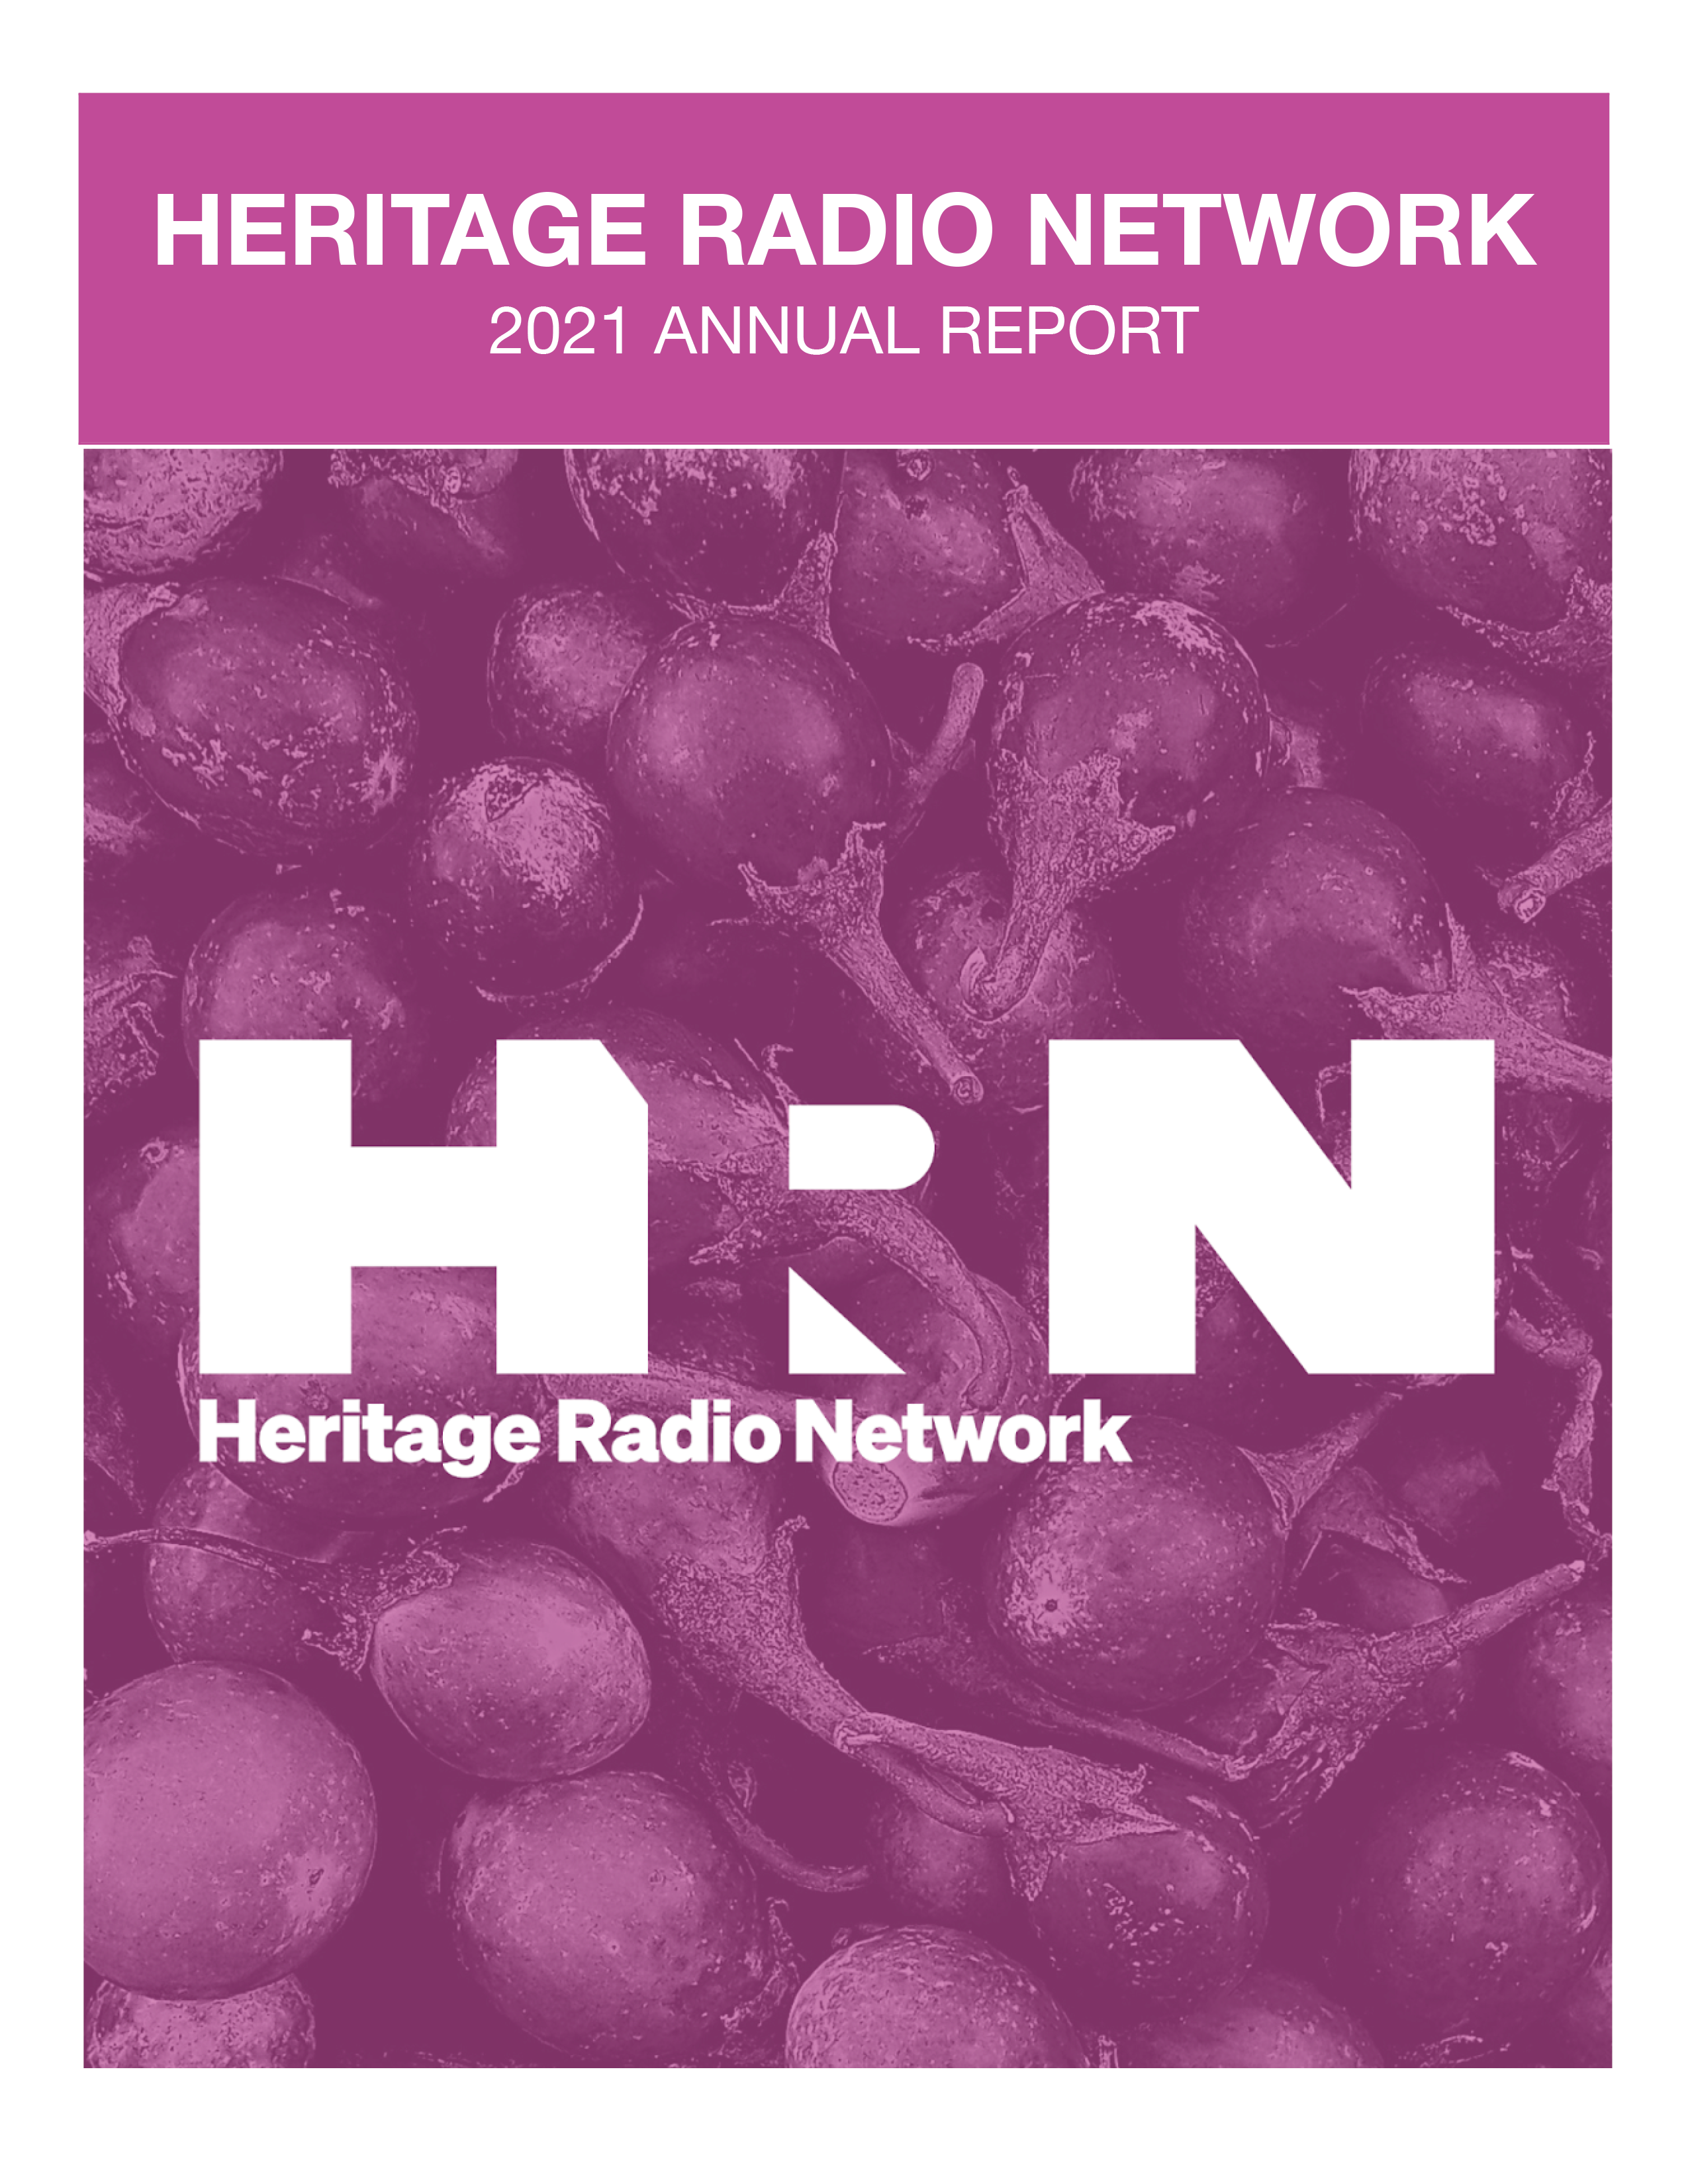 HRN's 2022 Annual Report